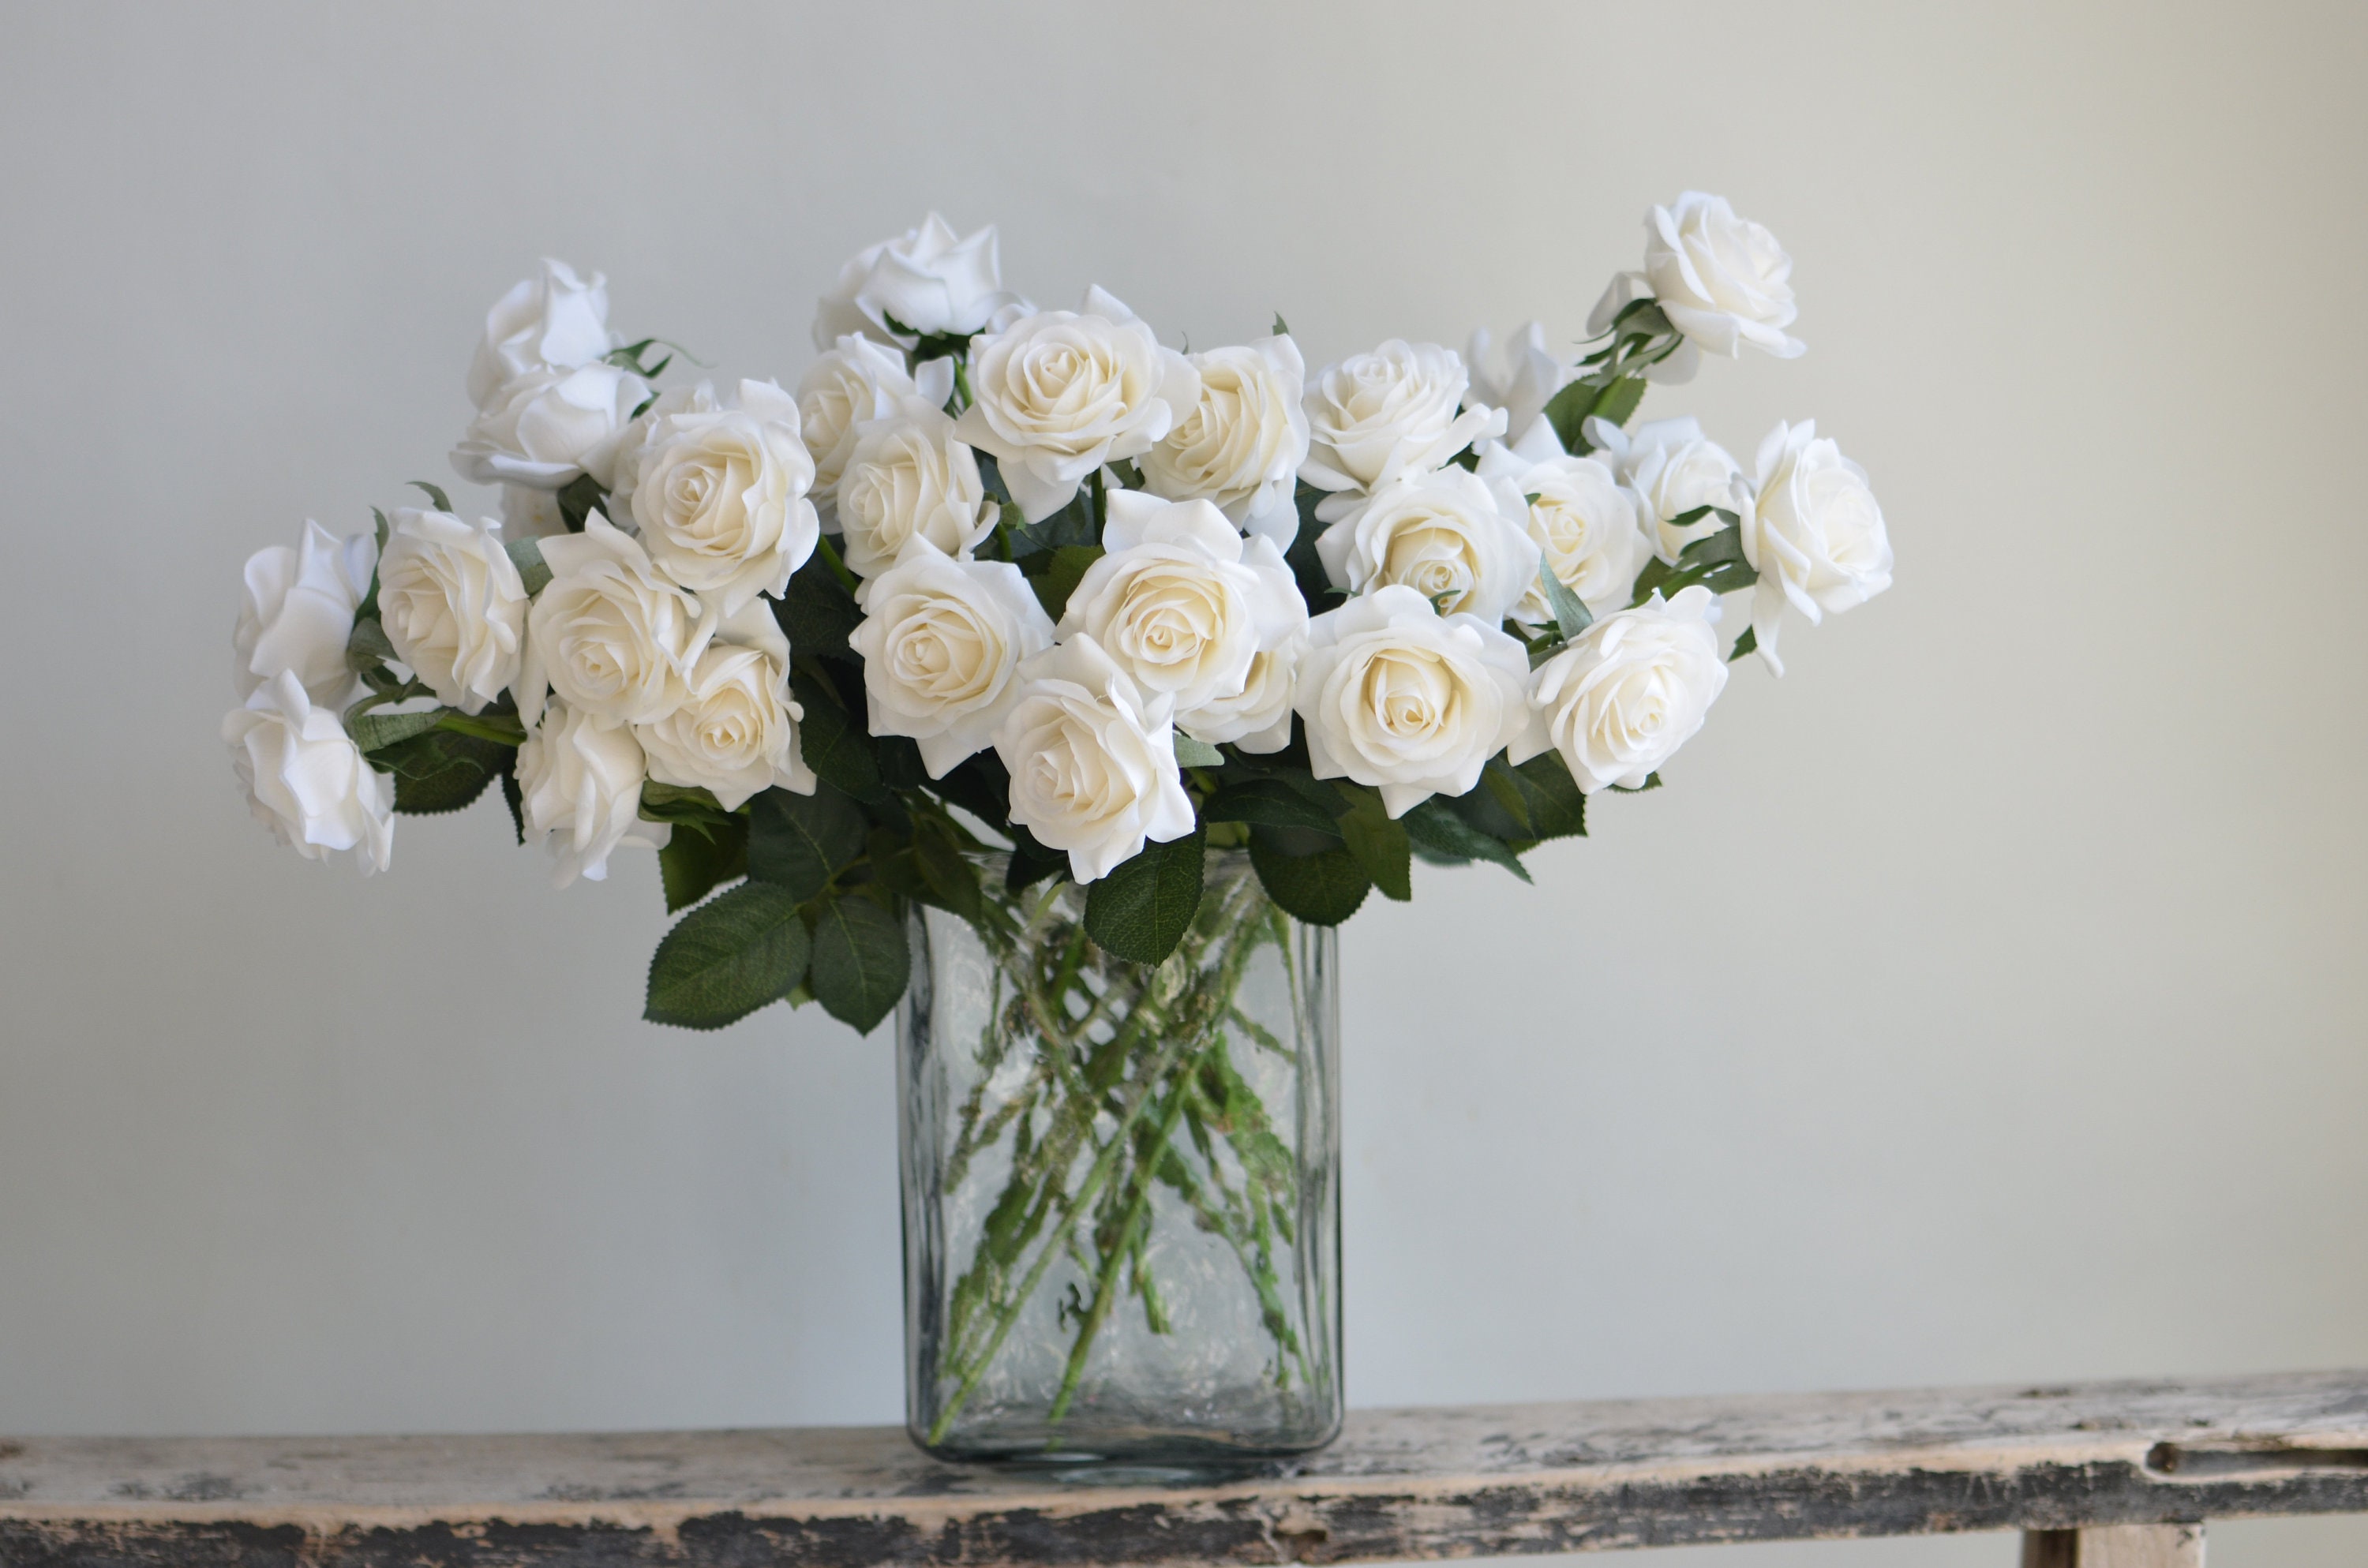  WYFC Multicolor Artificial Flowers, 10 Sticks Simulation Rose Floral  Arrangement, Fake Rose Bouquet for Wedding Home Decor (Color : Pink White)  : Home & Kitchen